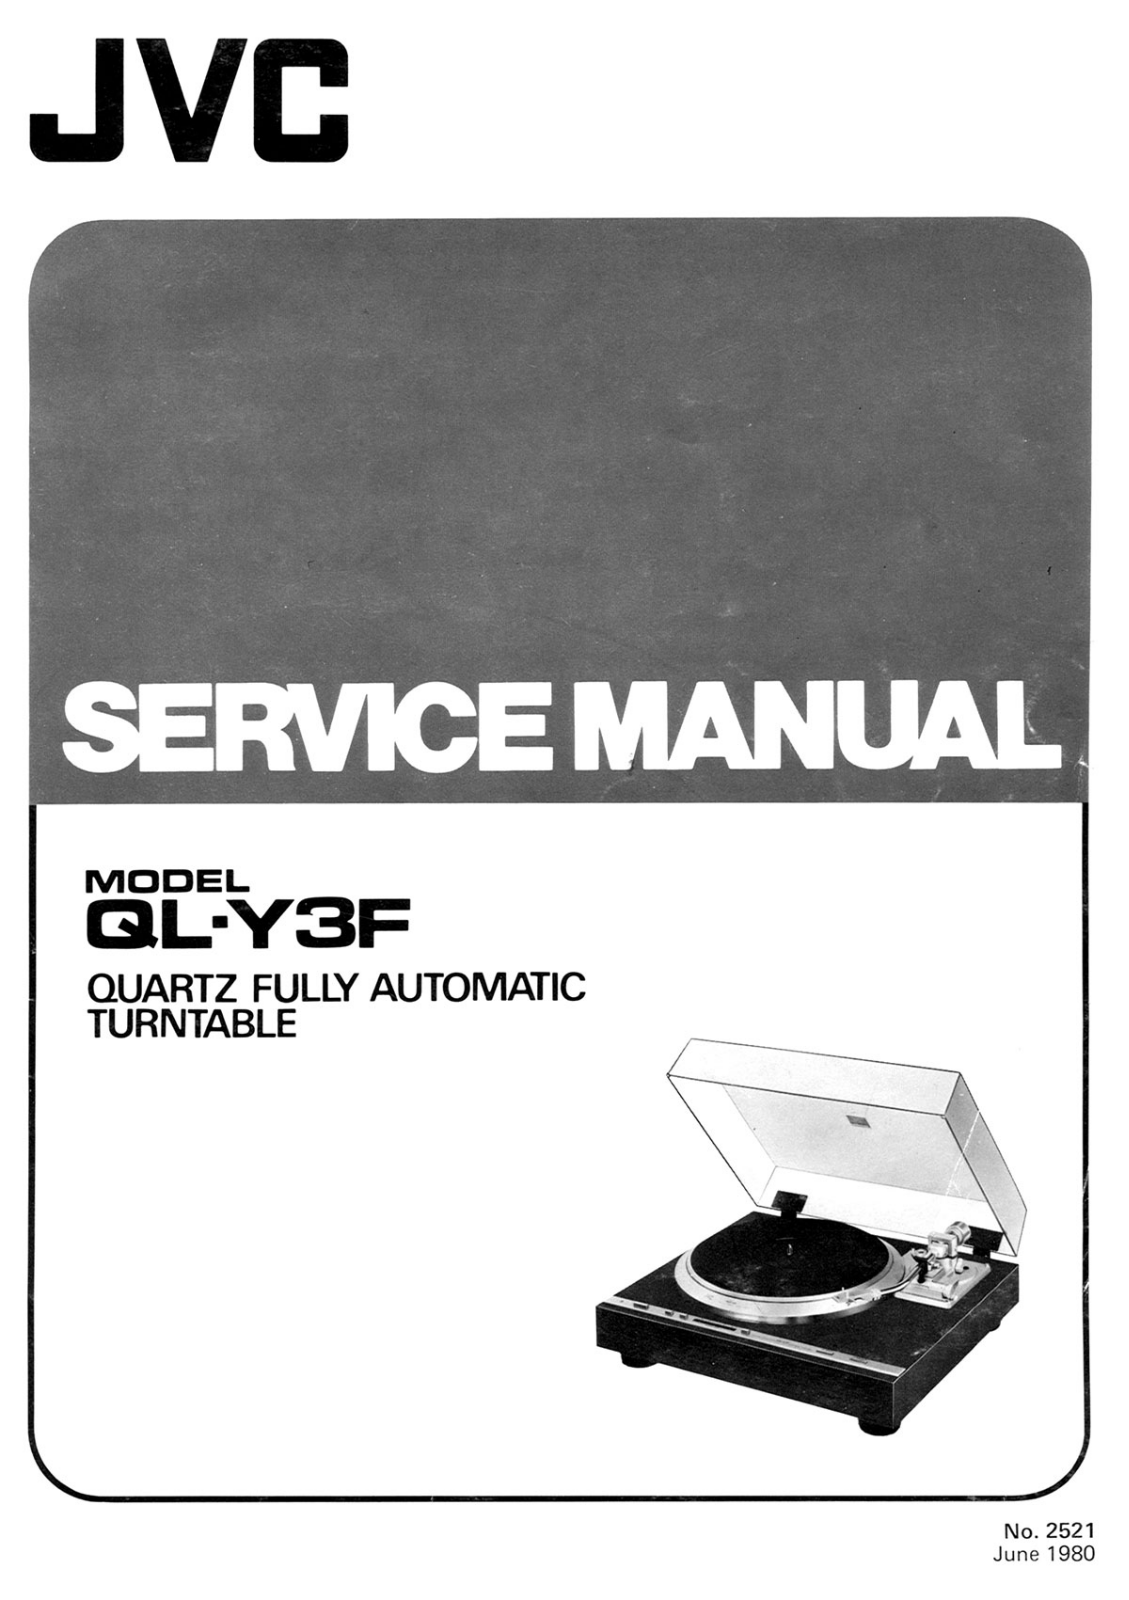 JVC QLY-3-F Service manual